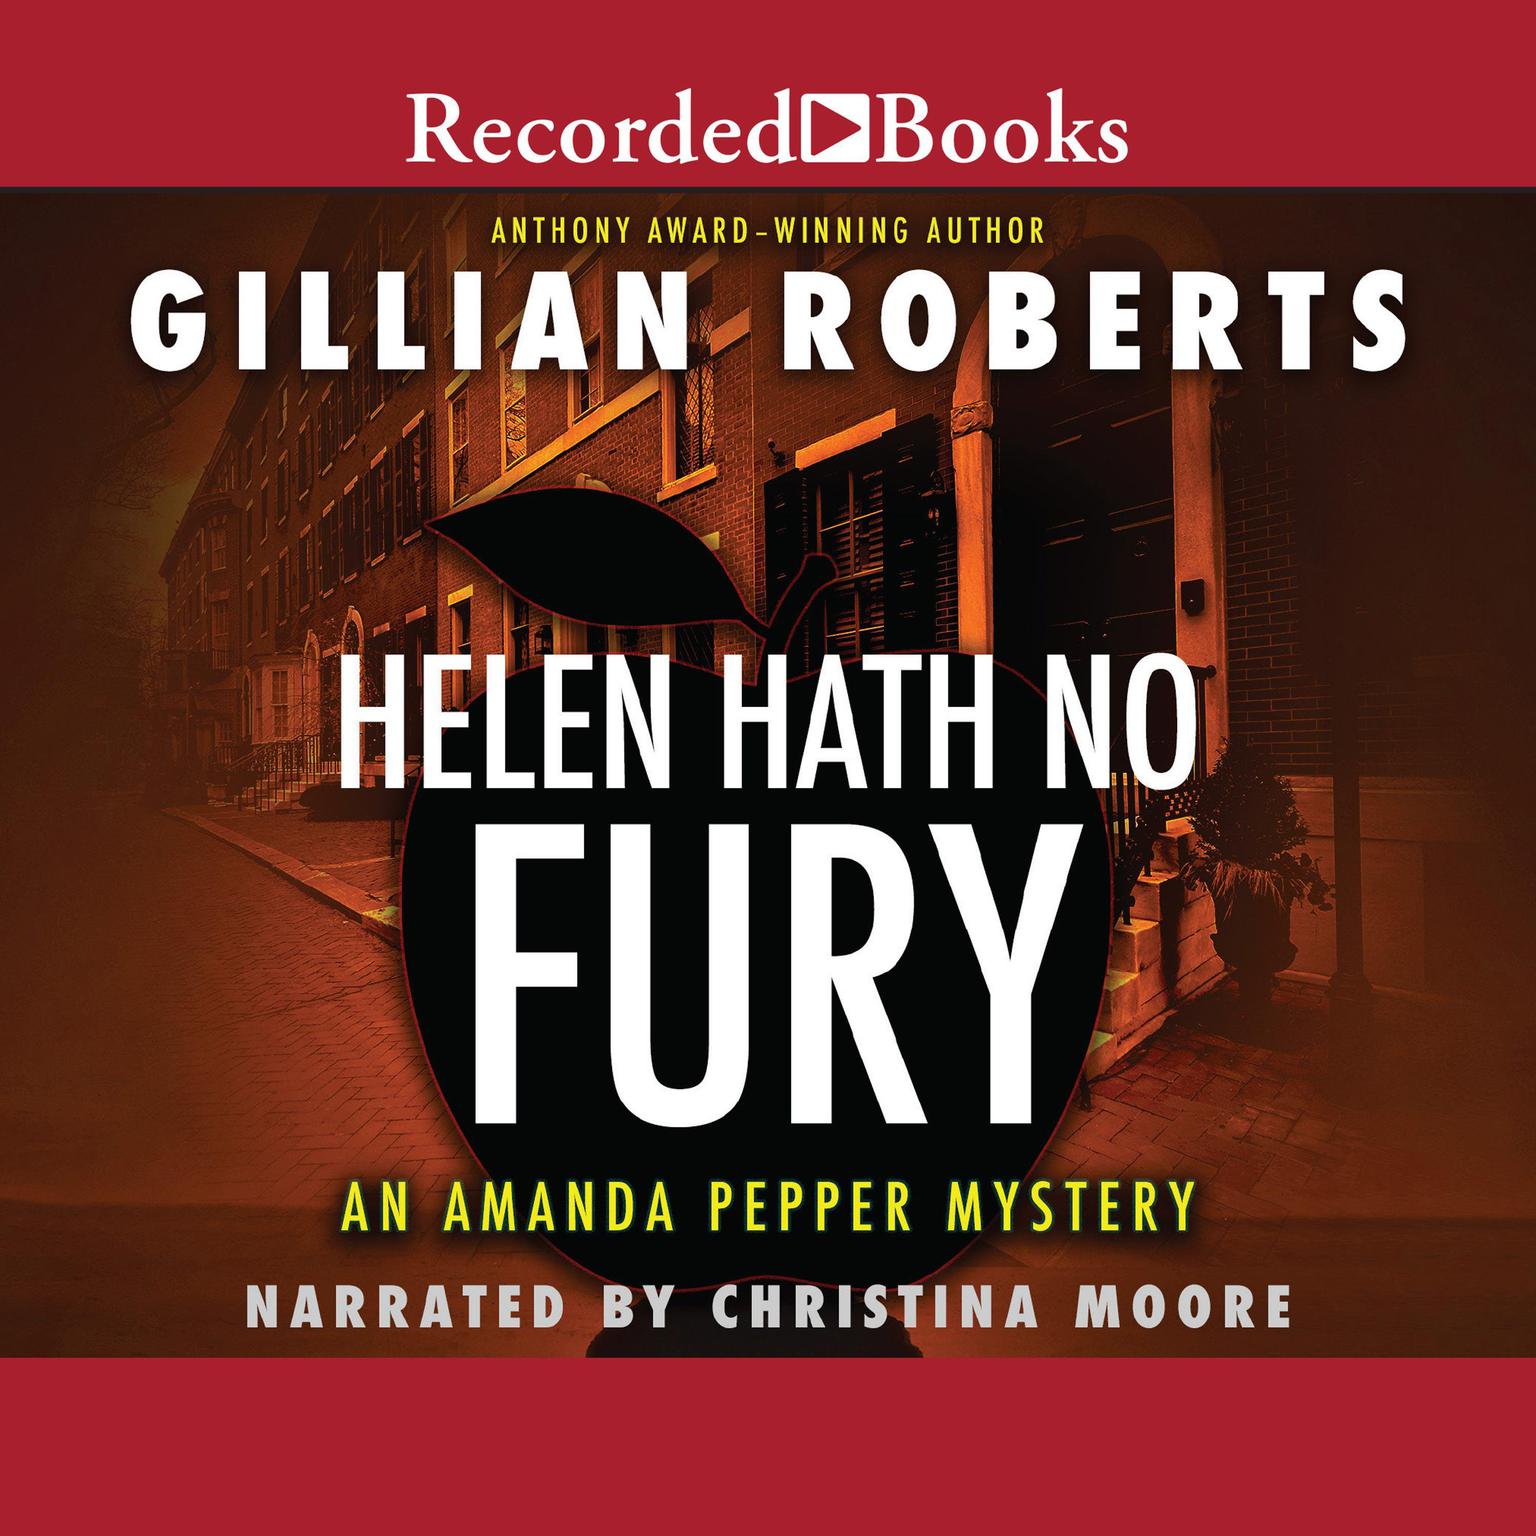 Helen Hath No Fury Audiobook, by Gillian Roberts